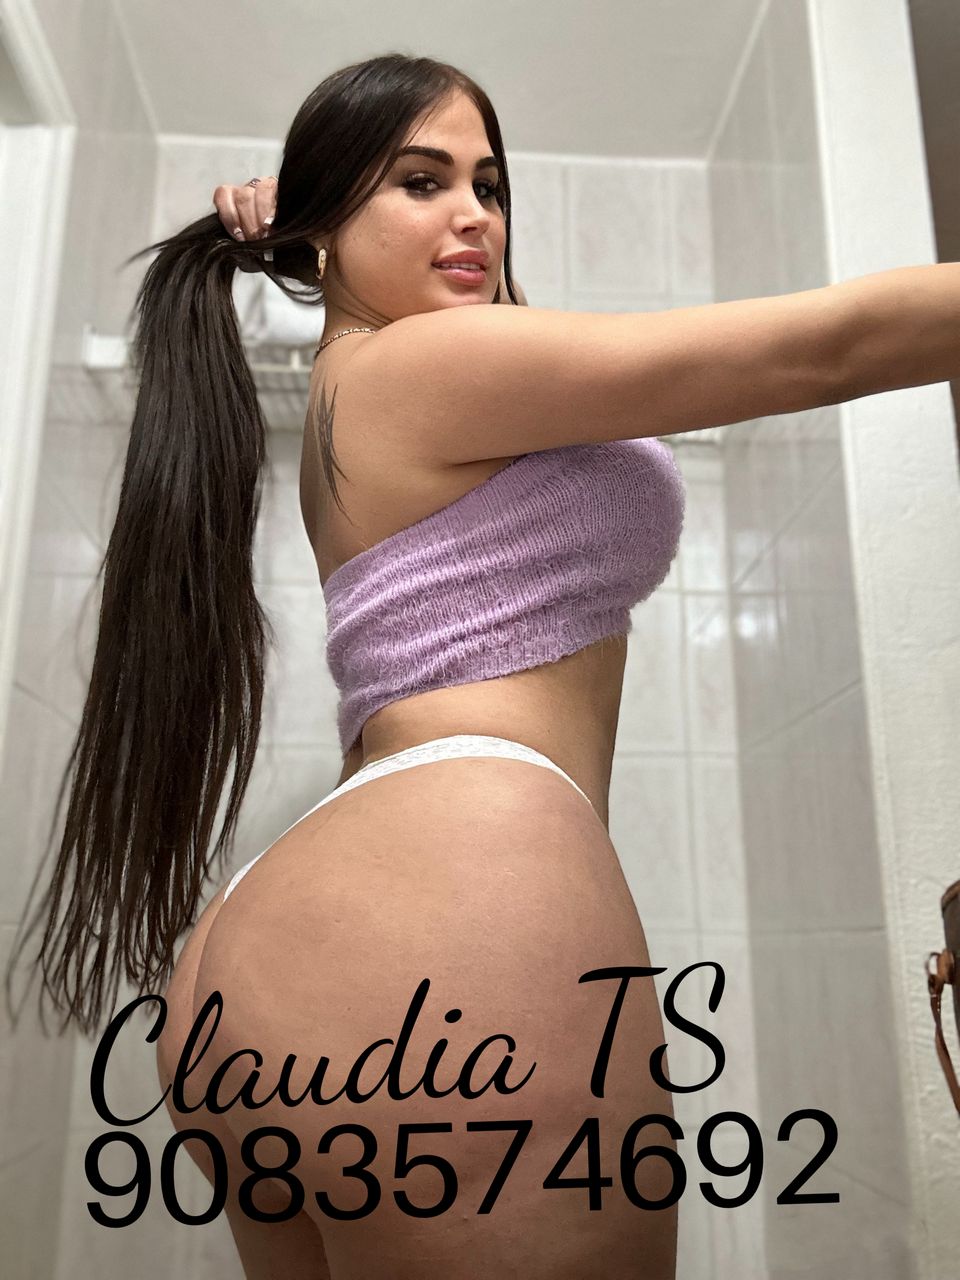 Claudia visiting